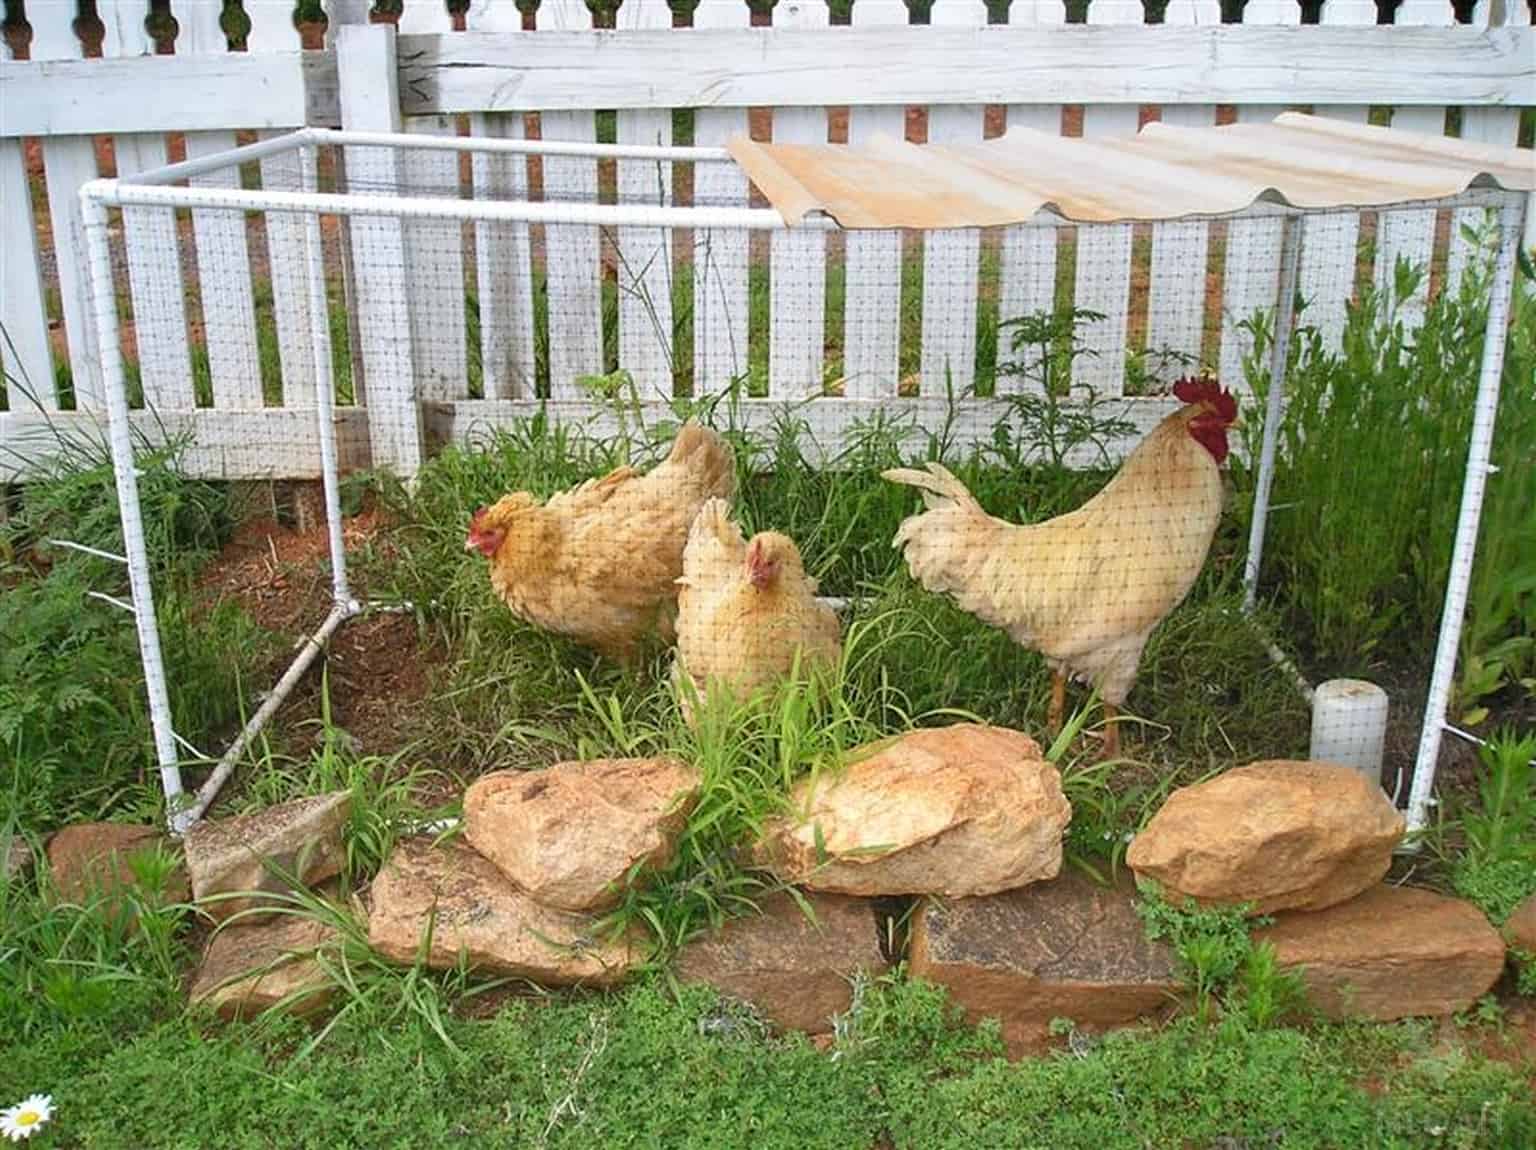 broody hen and chickens inside small chicken run